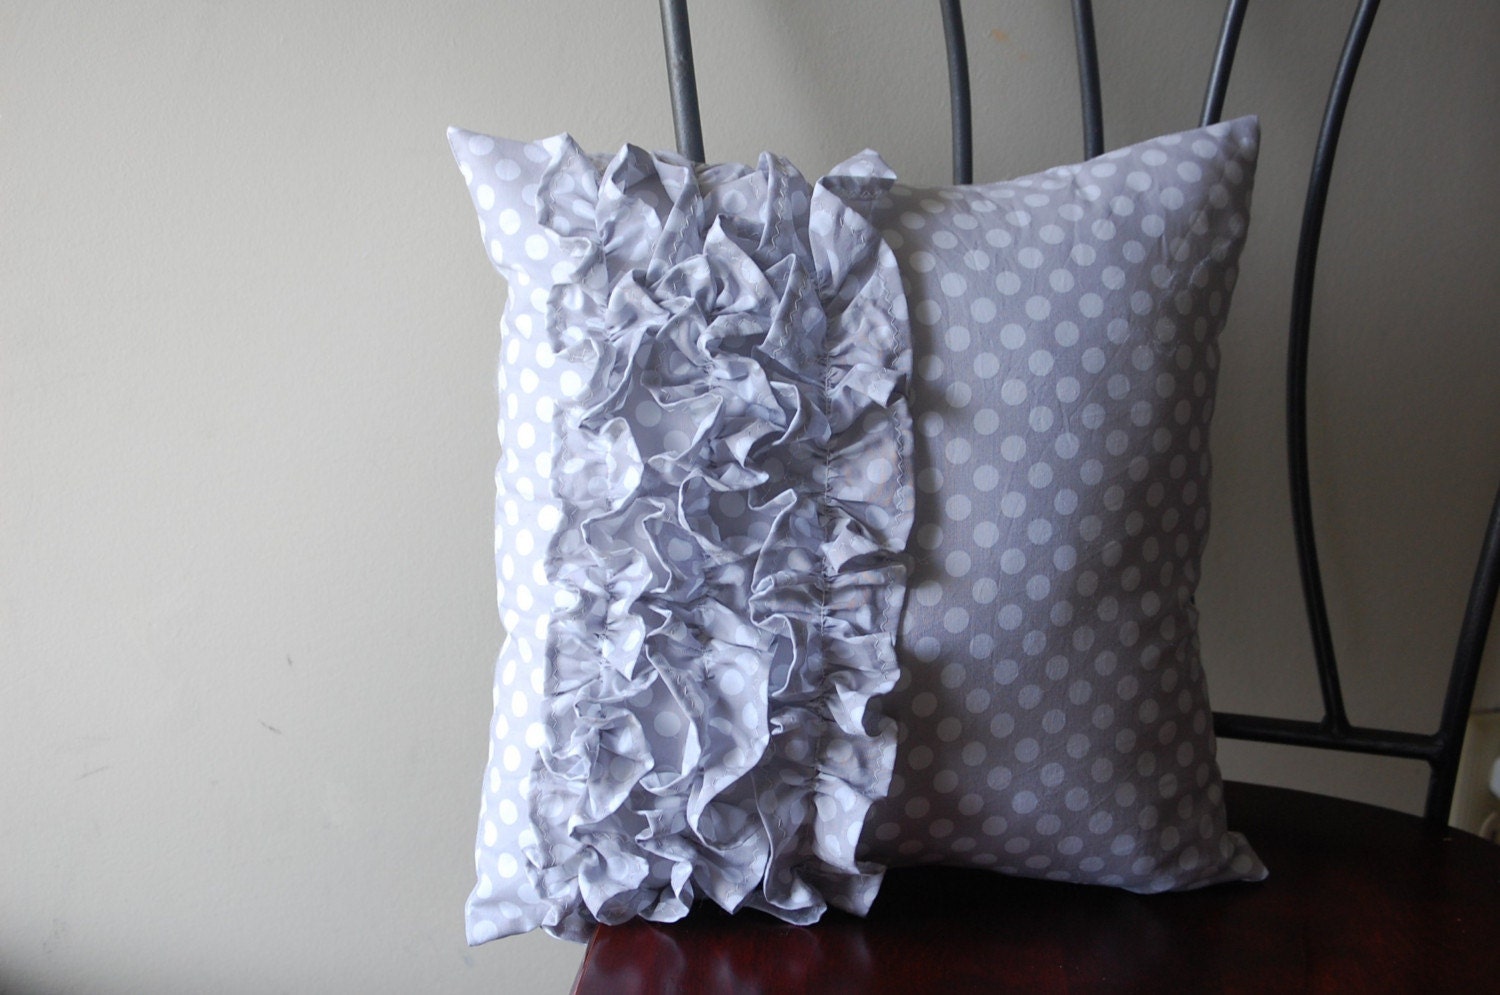 Side Ruffles Pillow in Gray/White Polkadot Cotton